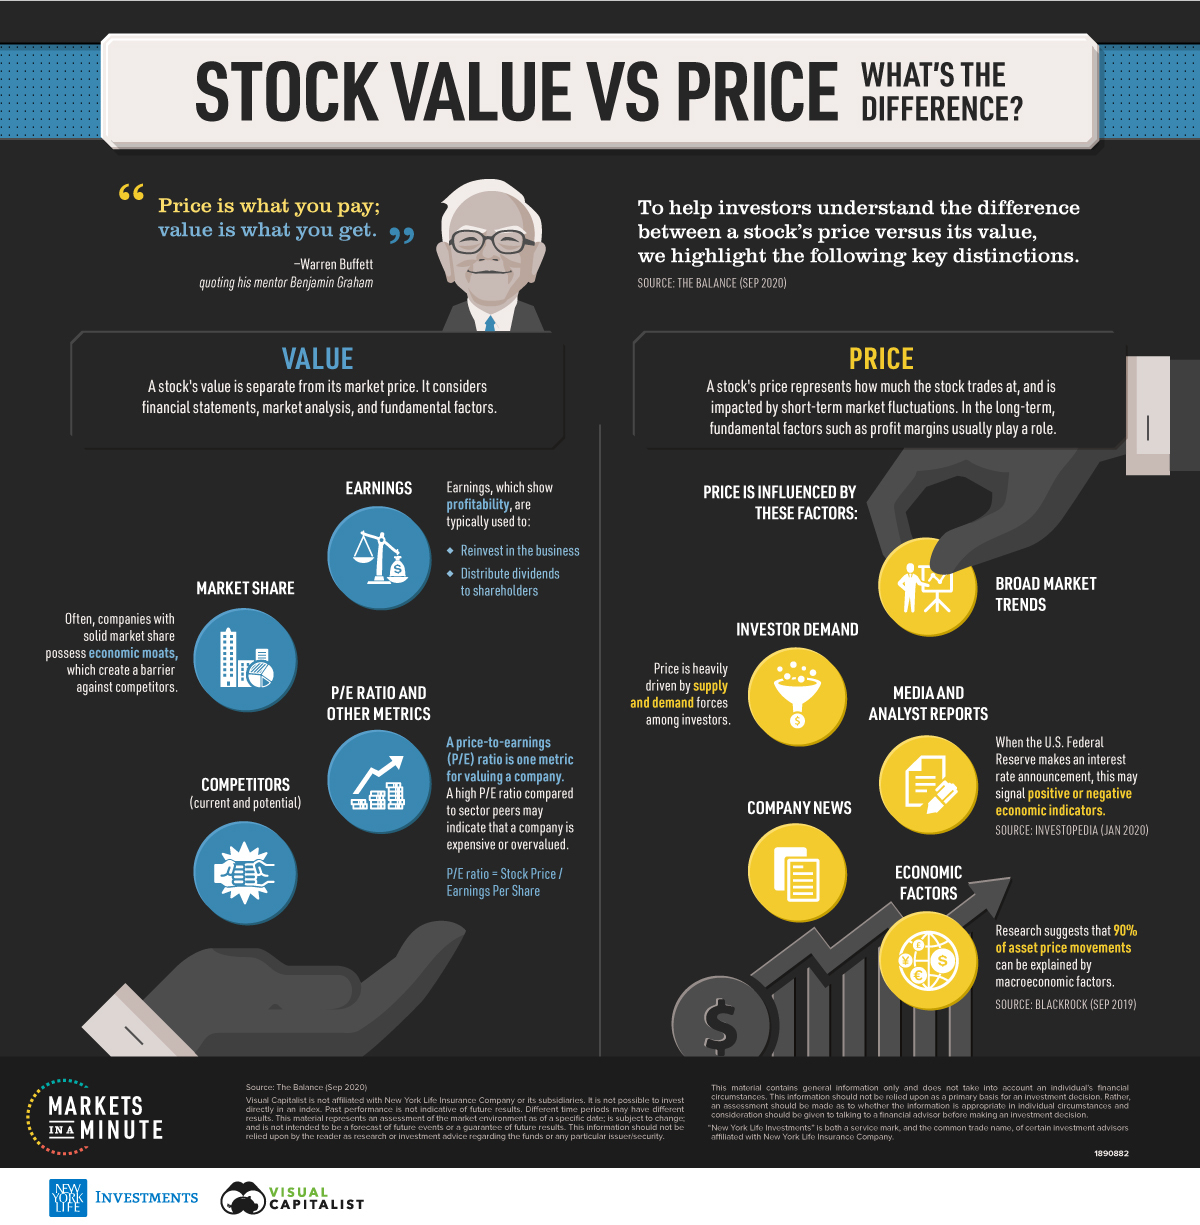 Stock Value